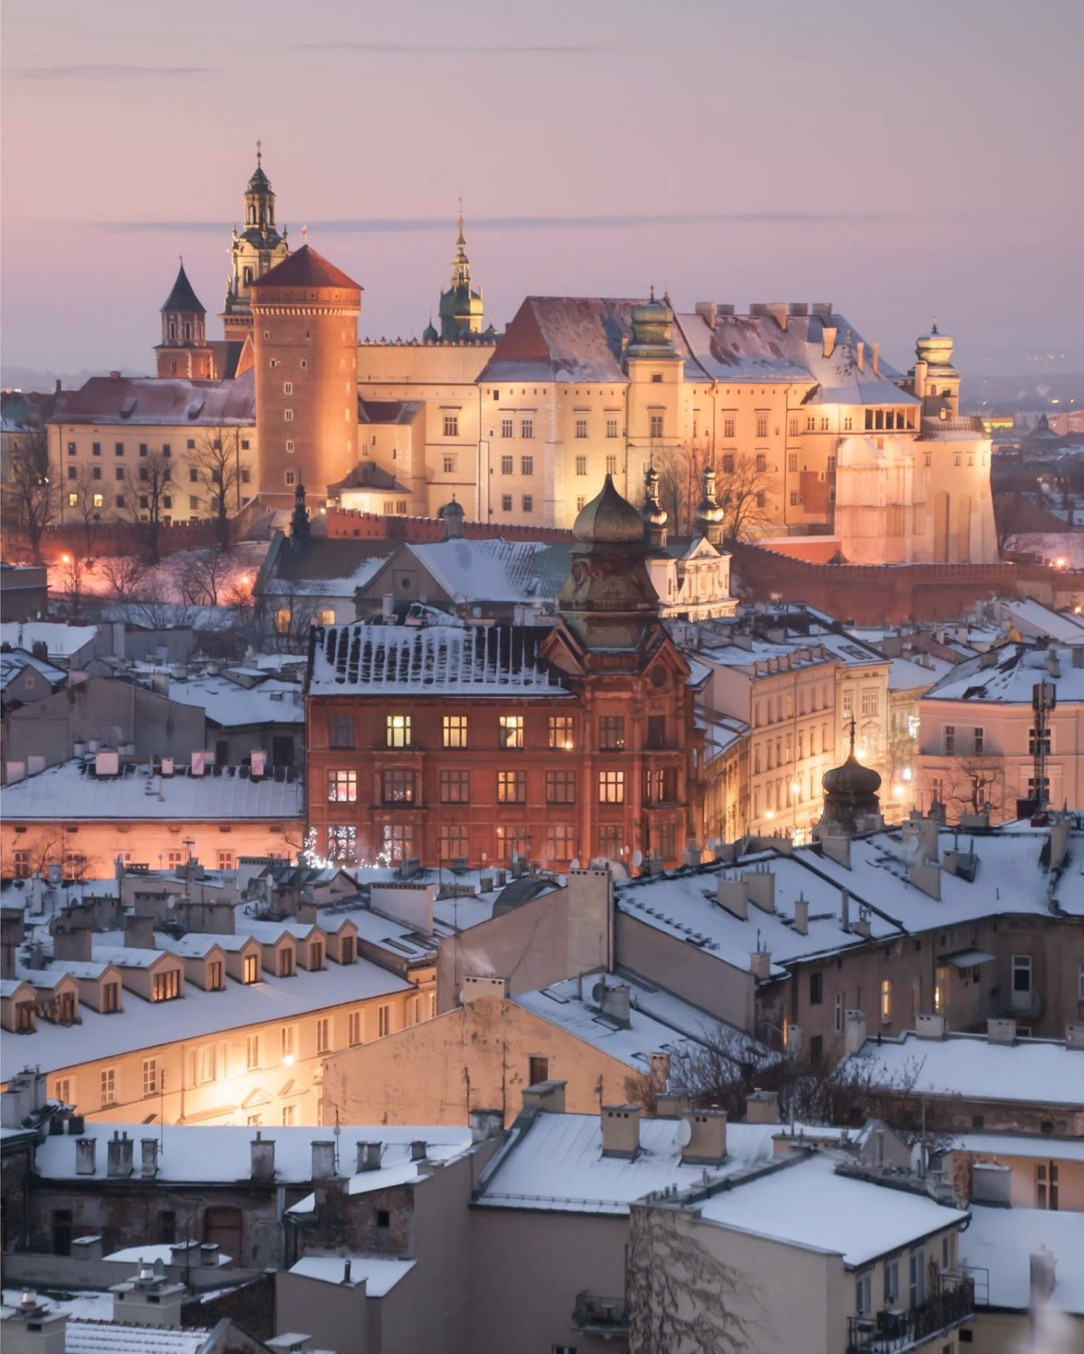 Royal Wawel Castle in Kraków (Poland) under a snow